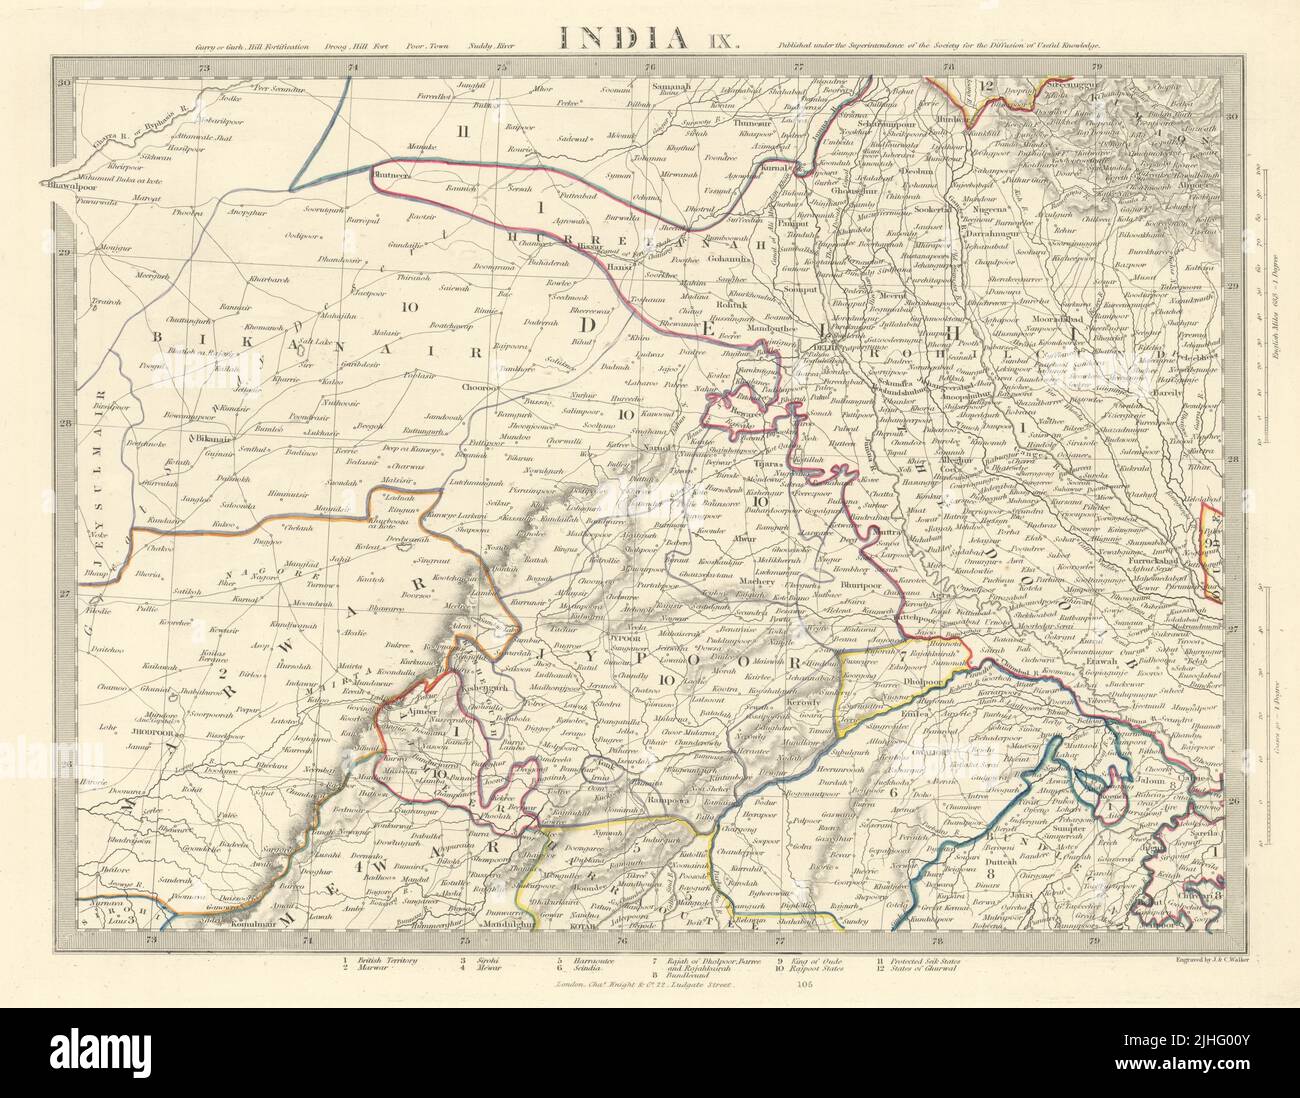 INDIA IX. RAJASTHAN Delhi Jaipur Marwar Bikaner Mewar Bundelkhand. SDUK 1851 map Stock Photo